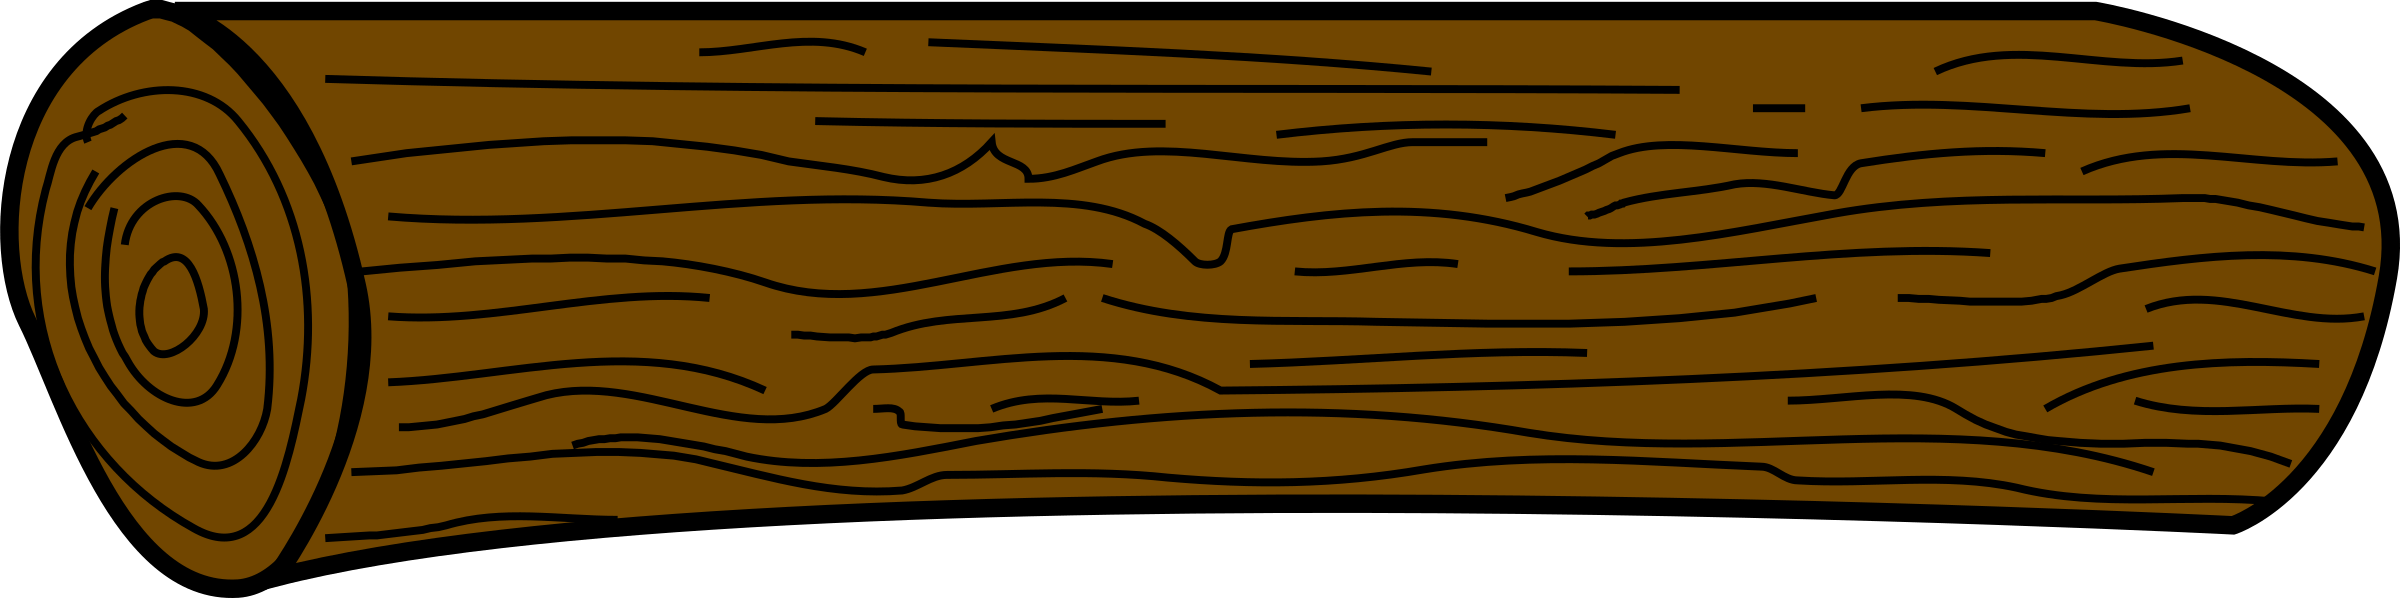 logs clipart brown